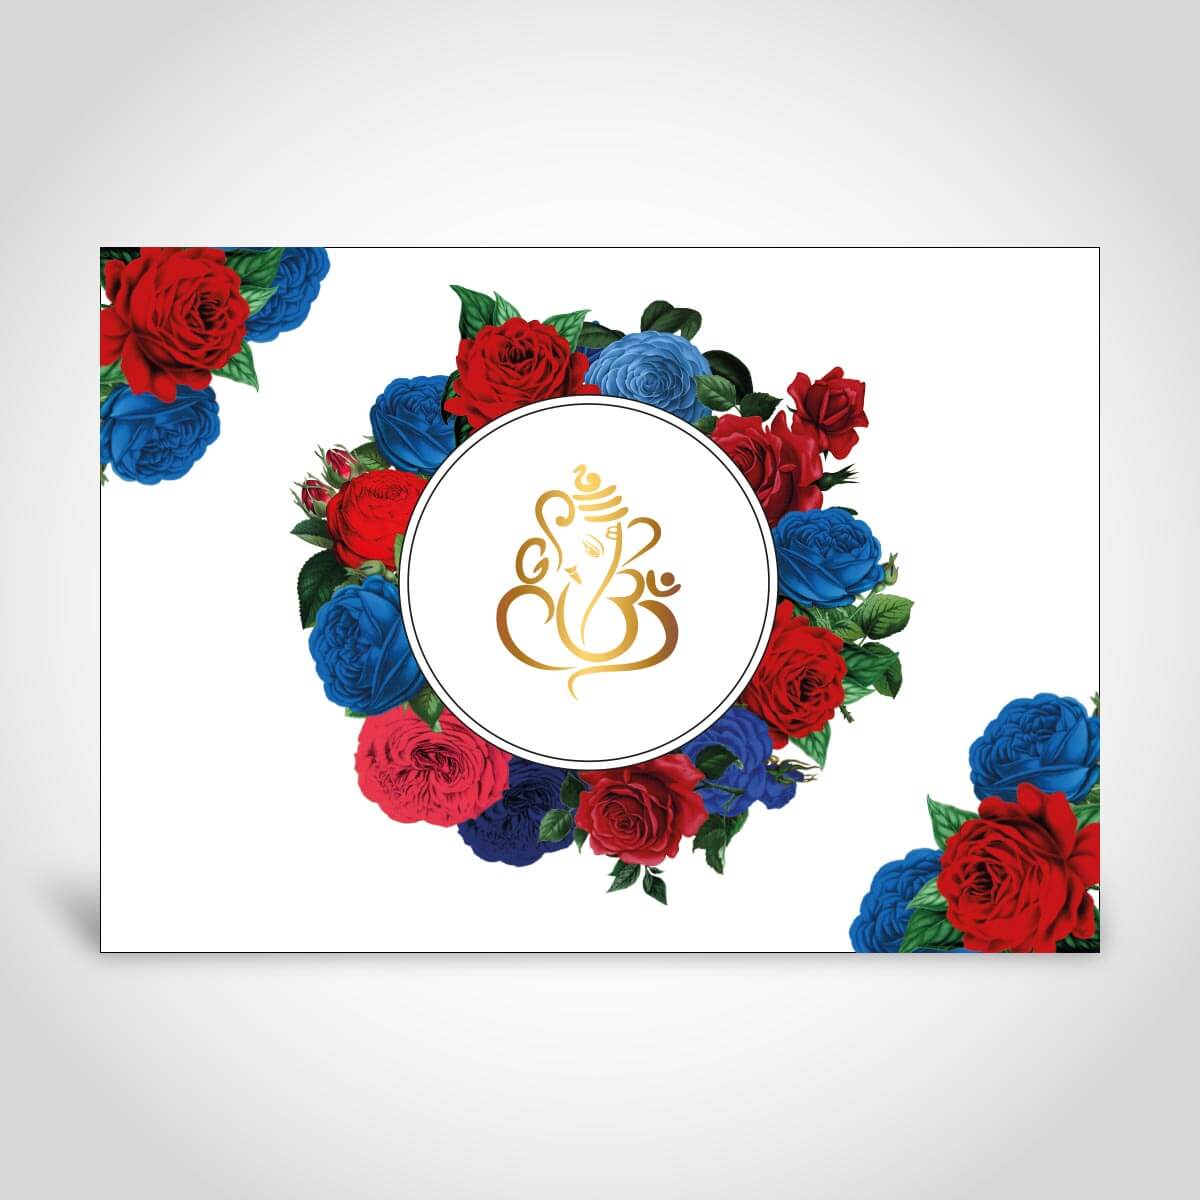 Hindu Wedding Invitation, Red & Blue Floral Wreaths, Gold Foiled Ganesh – CFK423